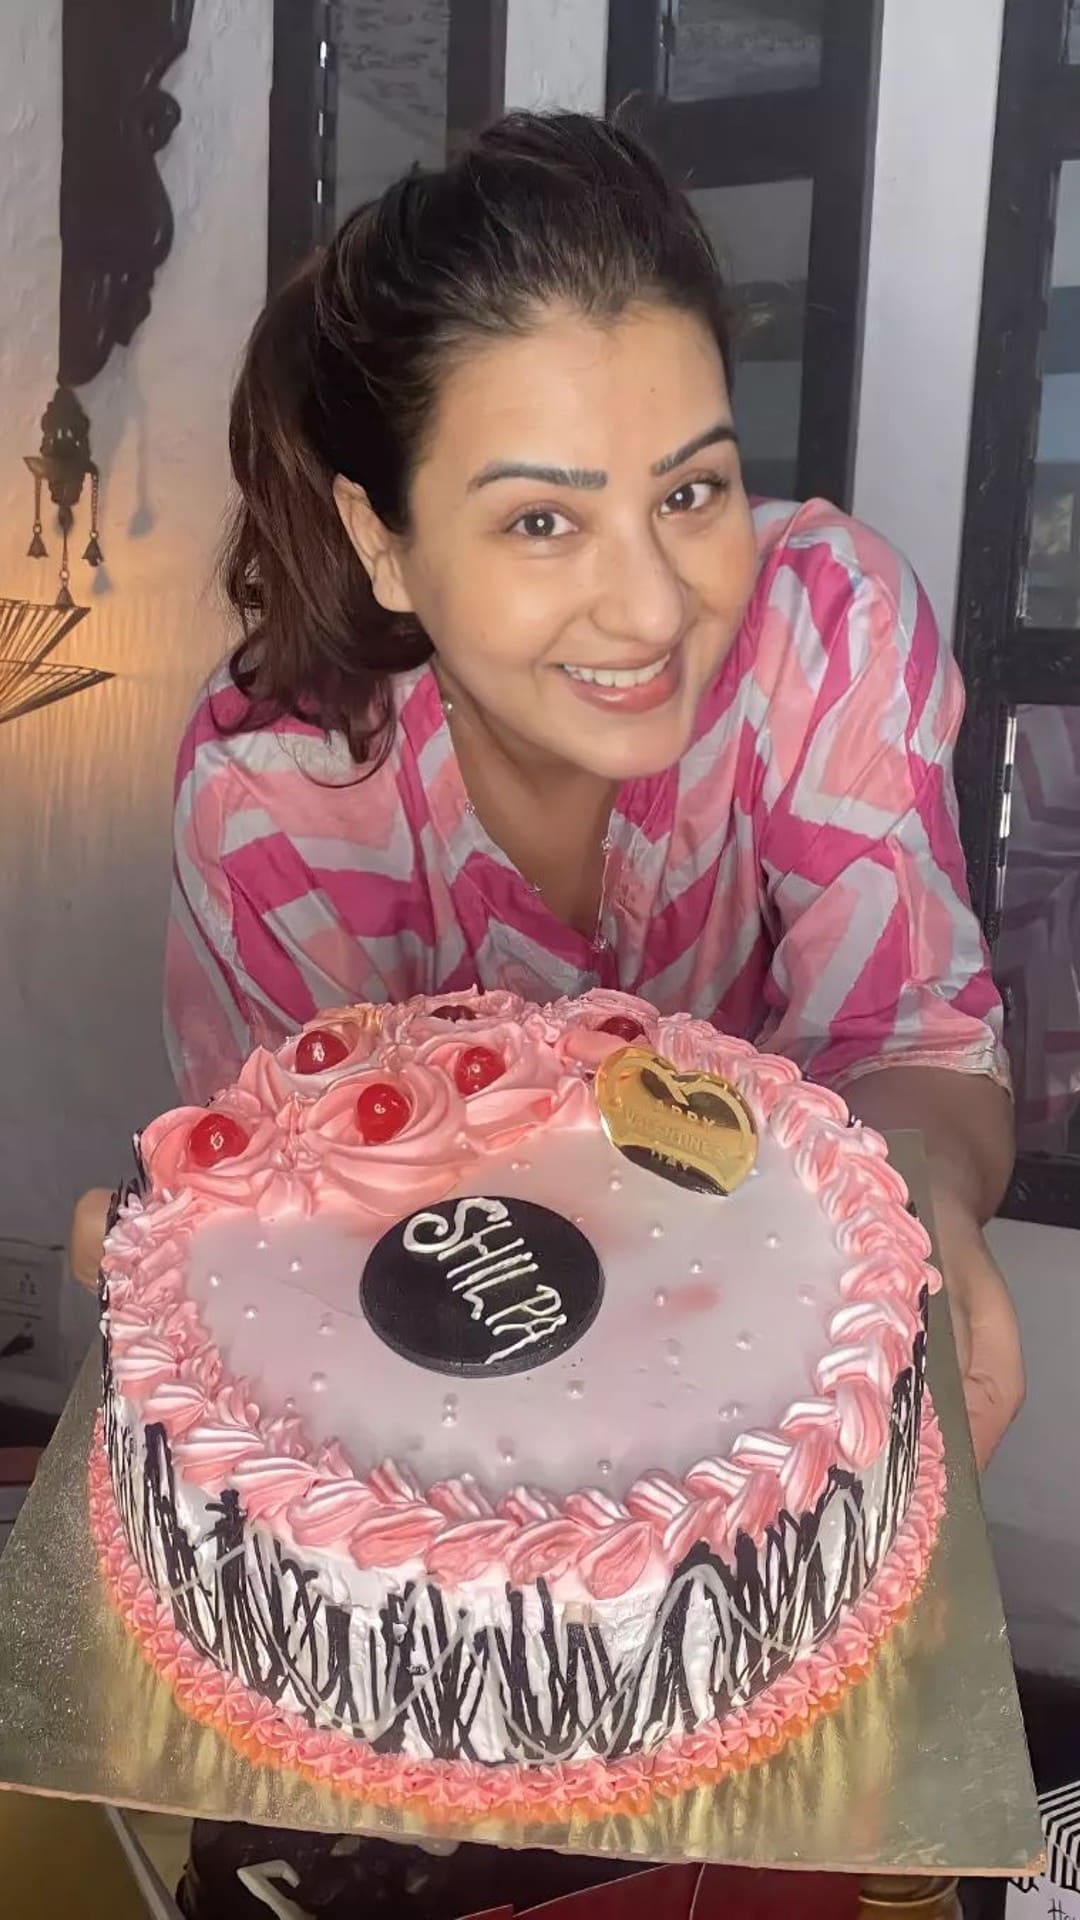 CHOCOLATE MOUSSE BIRTHDAY CAKE - Shilpa's YUMMY CAKES | Facebook